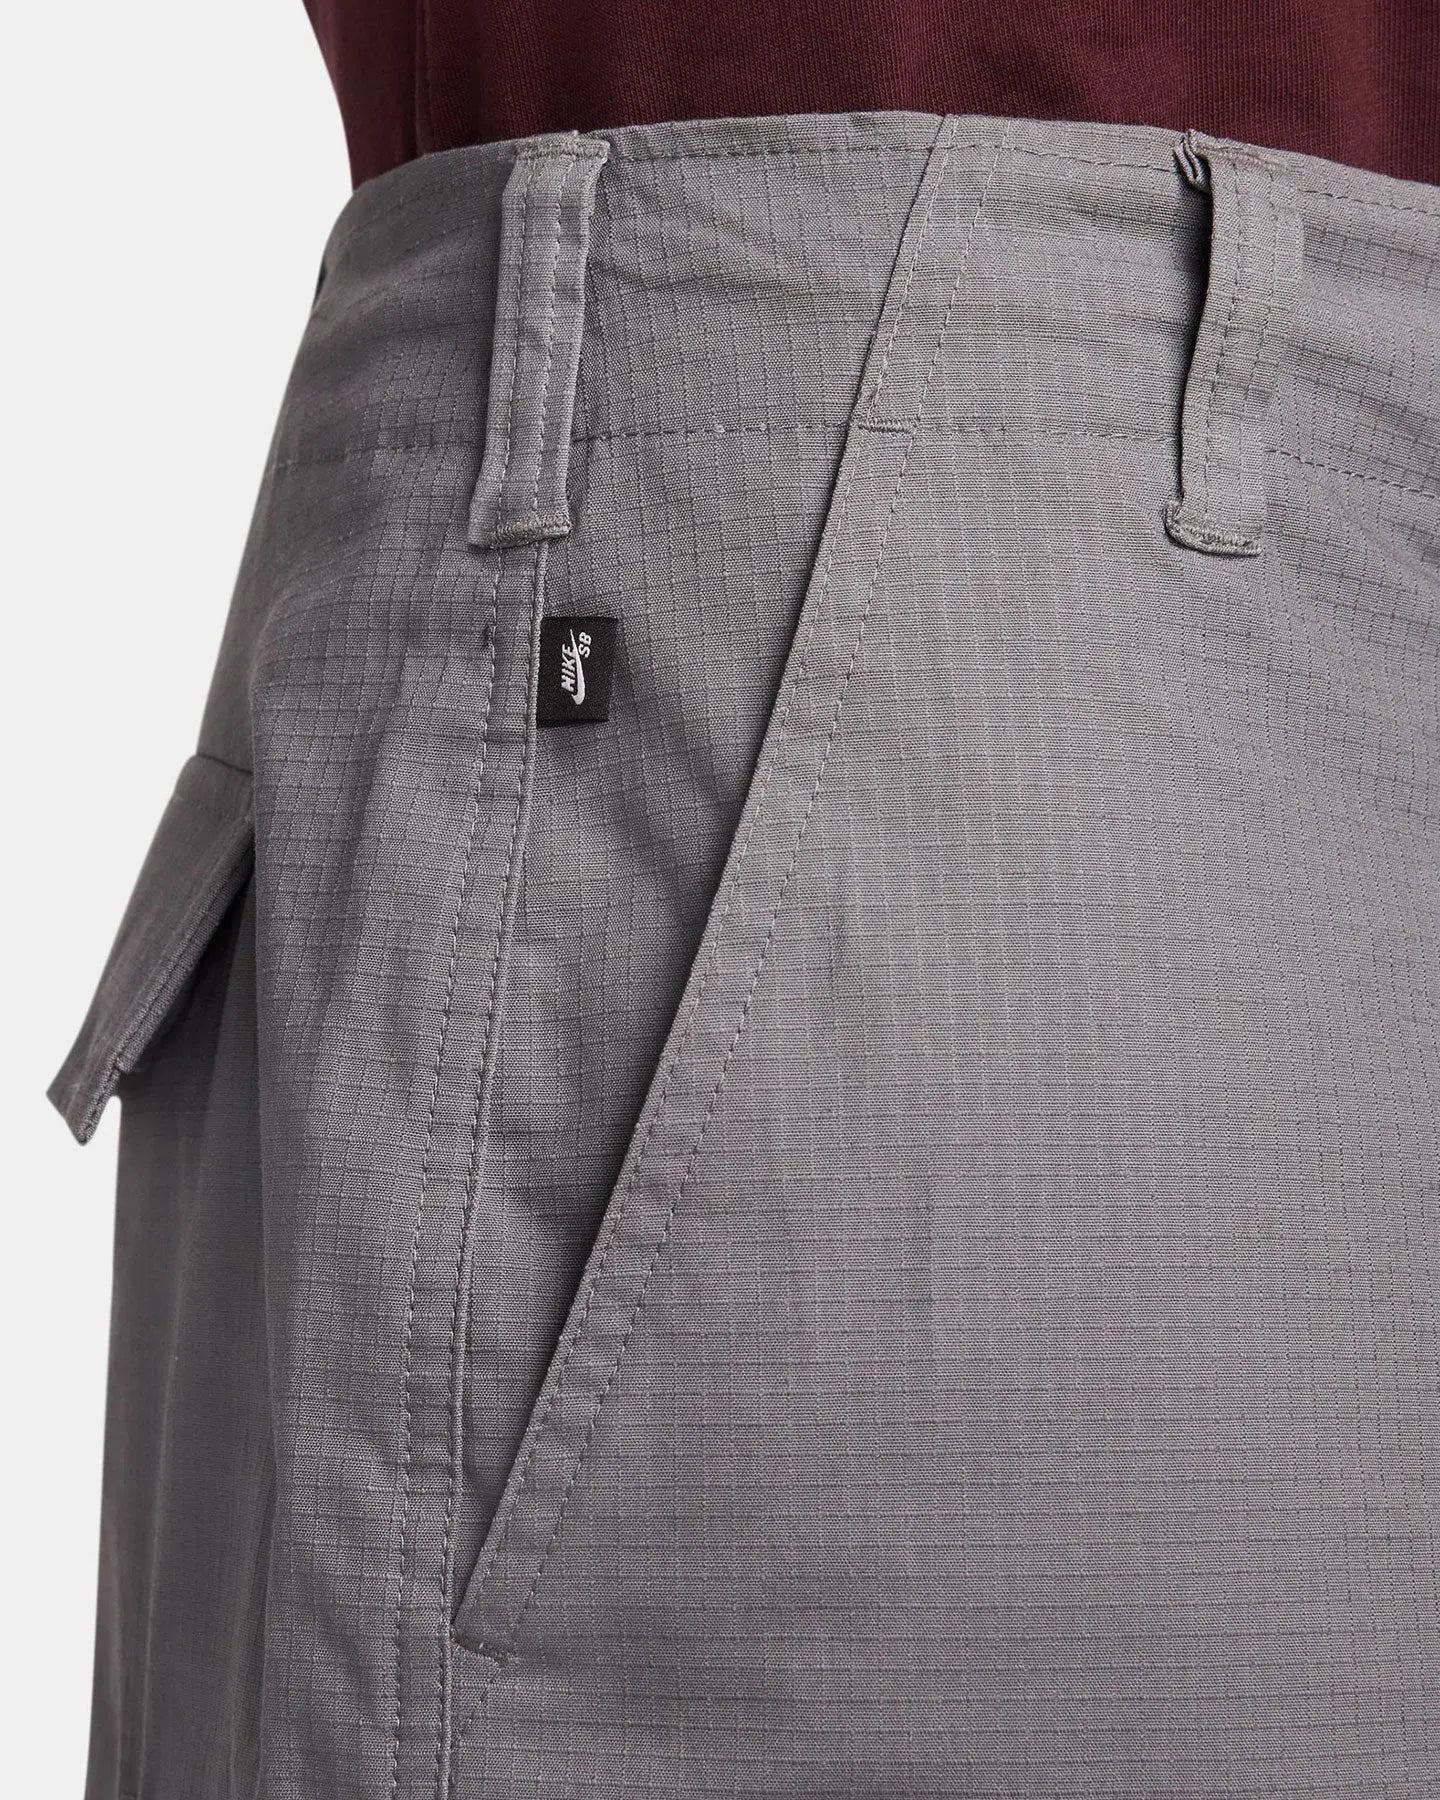 Nike SB Kearny Cargo Short - Smoke Grey Shorts